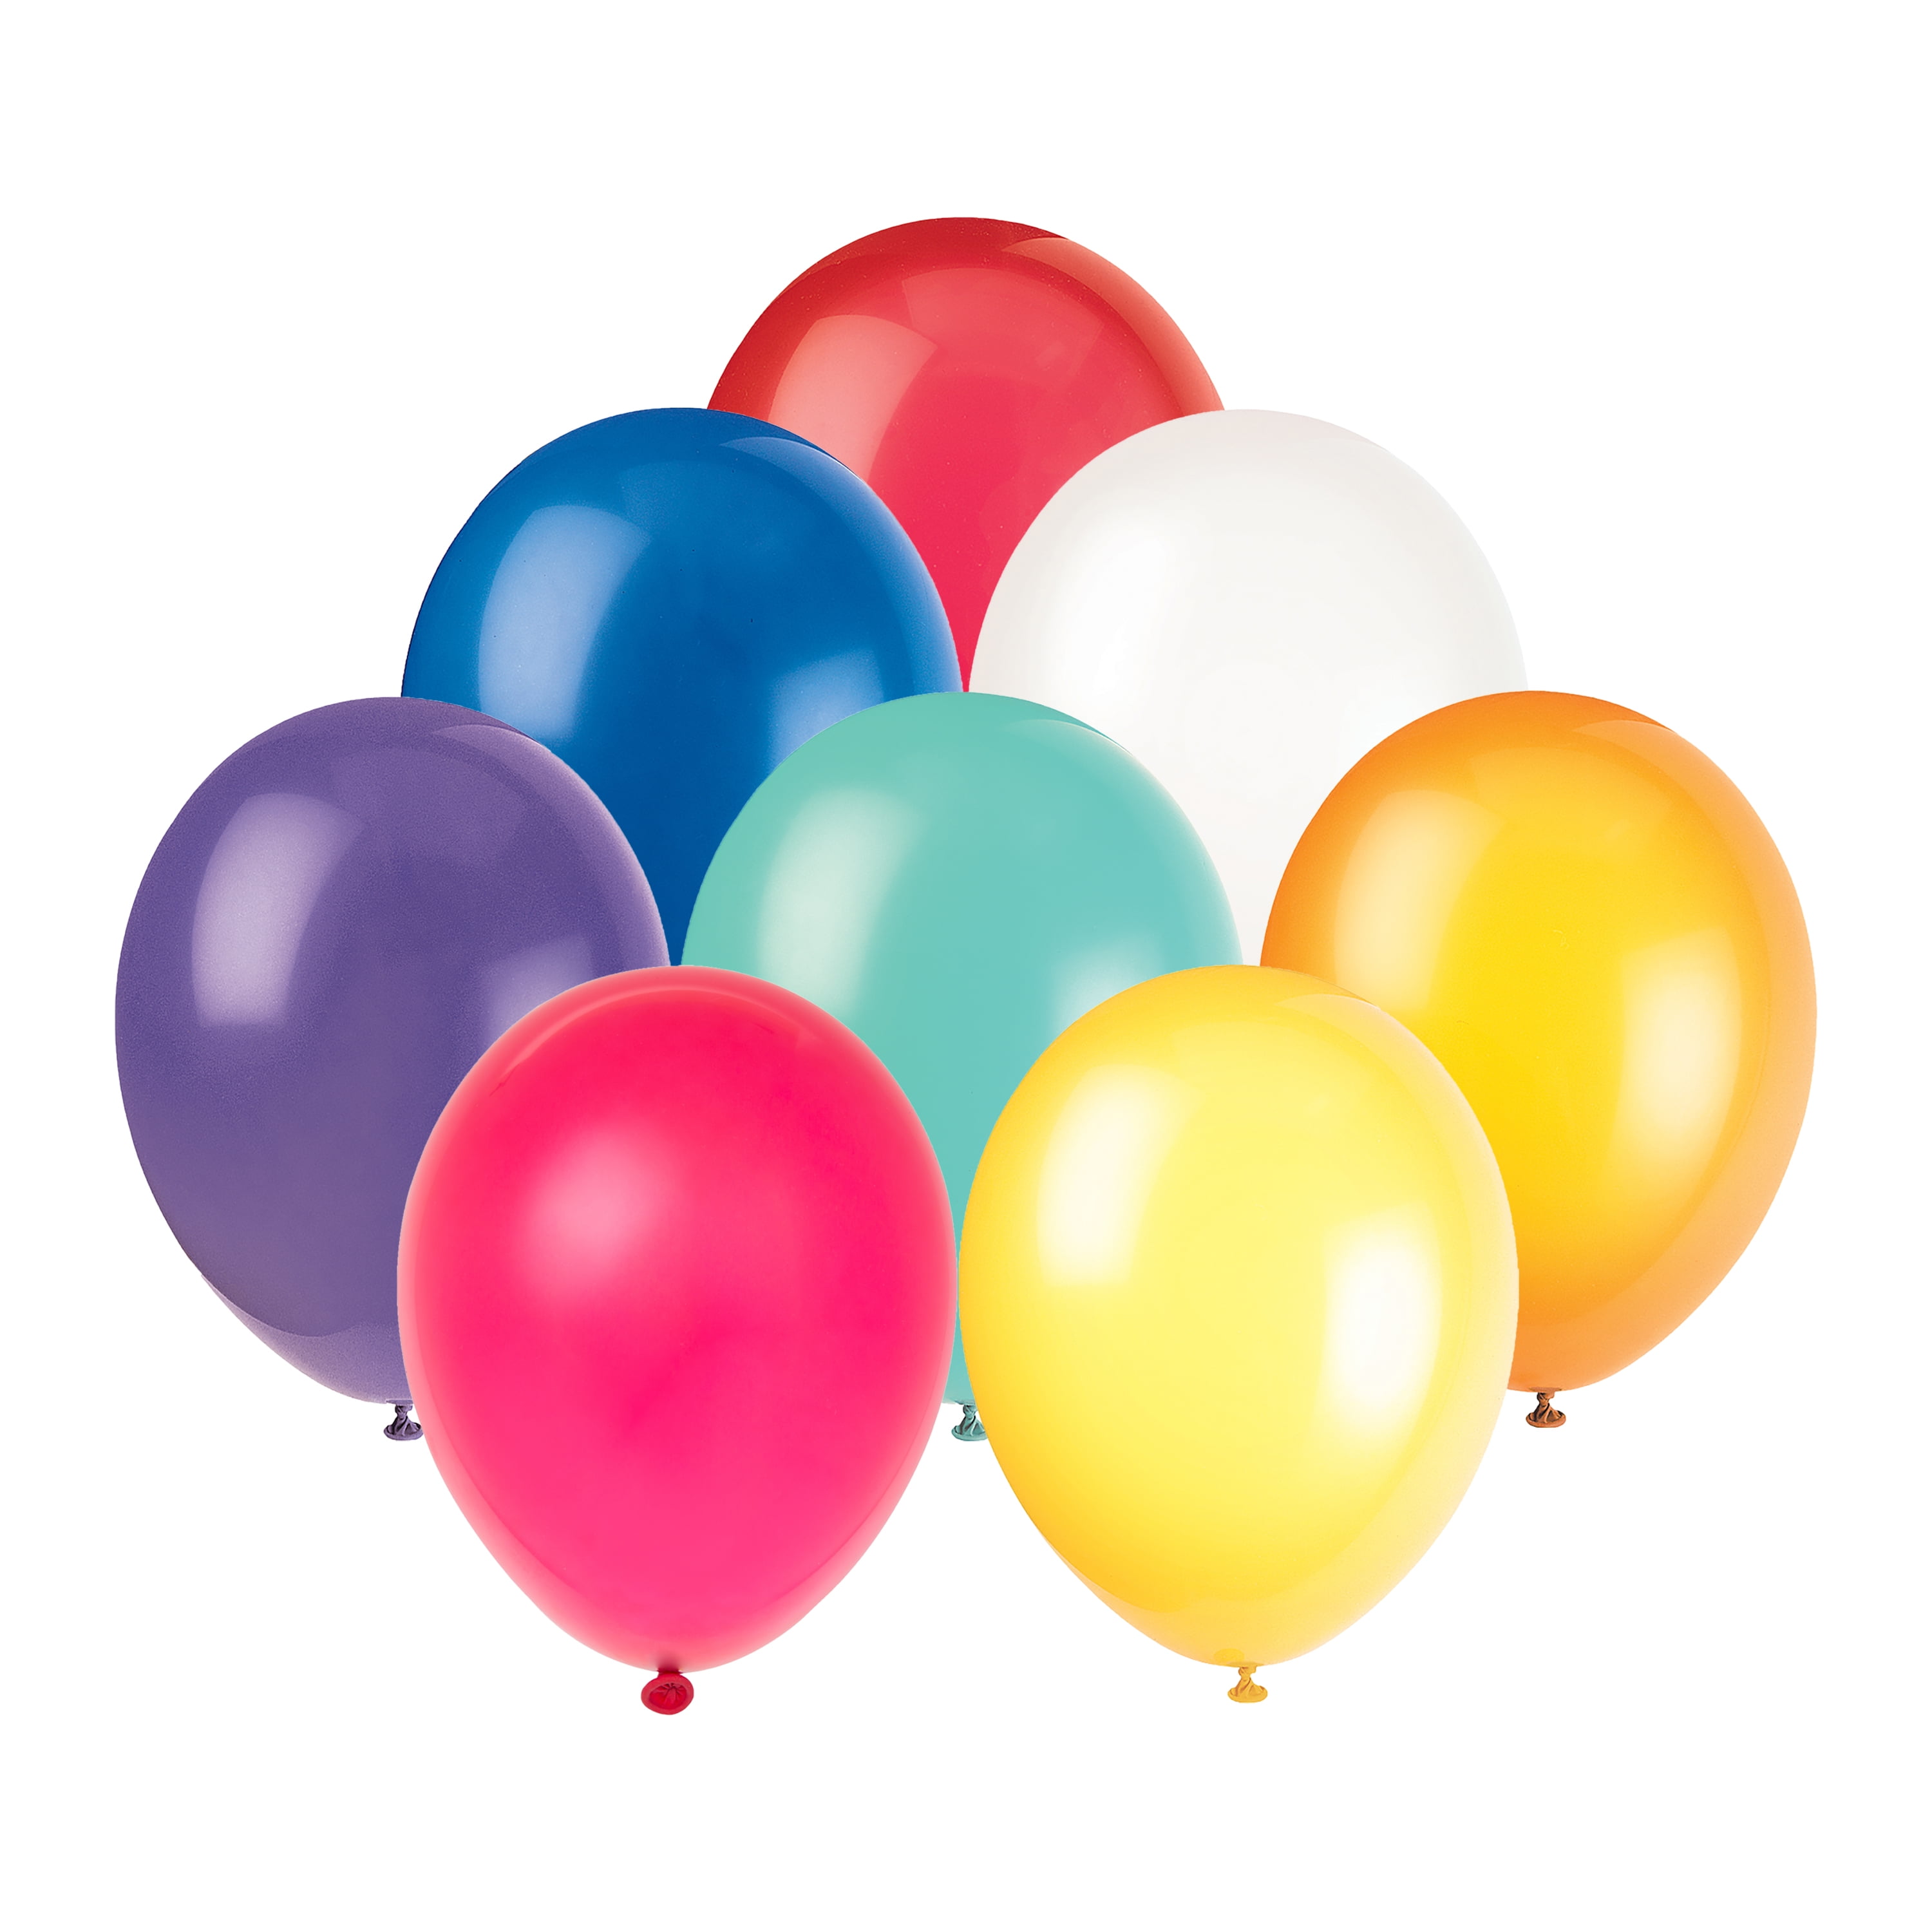 20 x Best Round Latex Balloons Quality Standard ballon Colour baloon latex